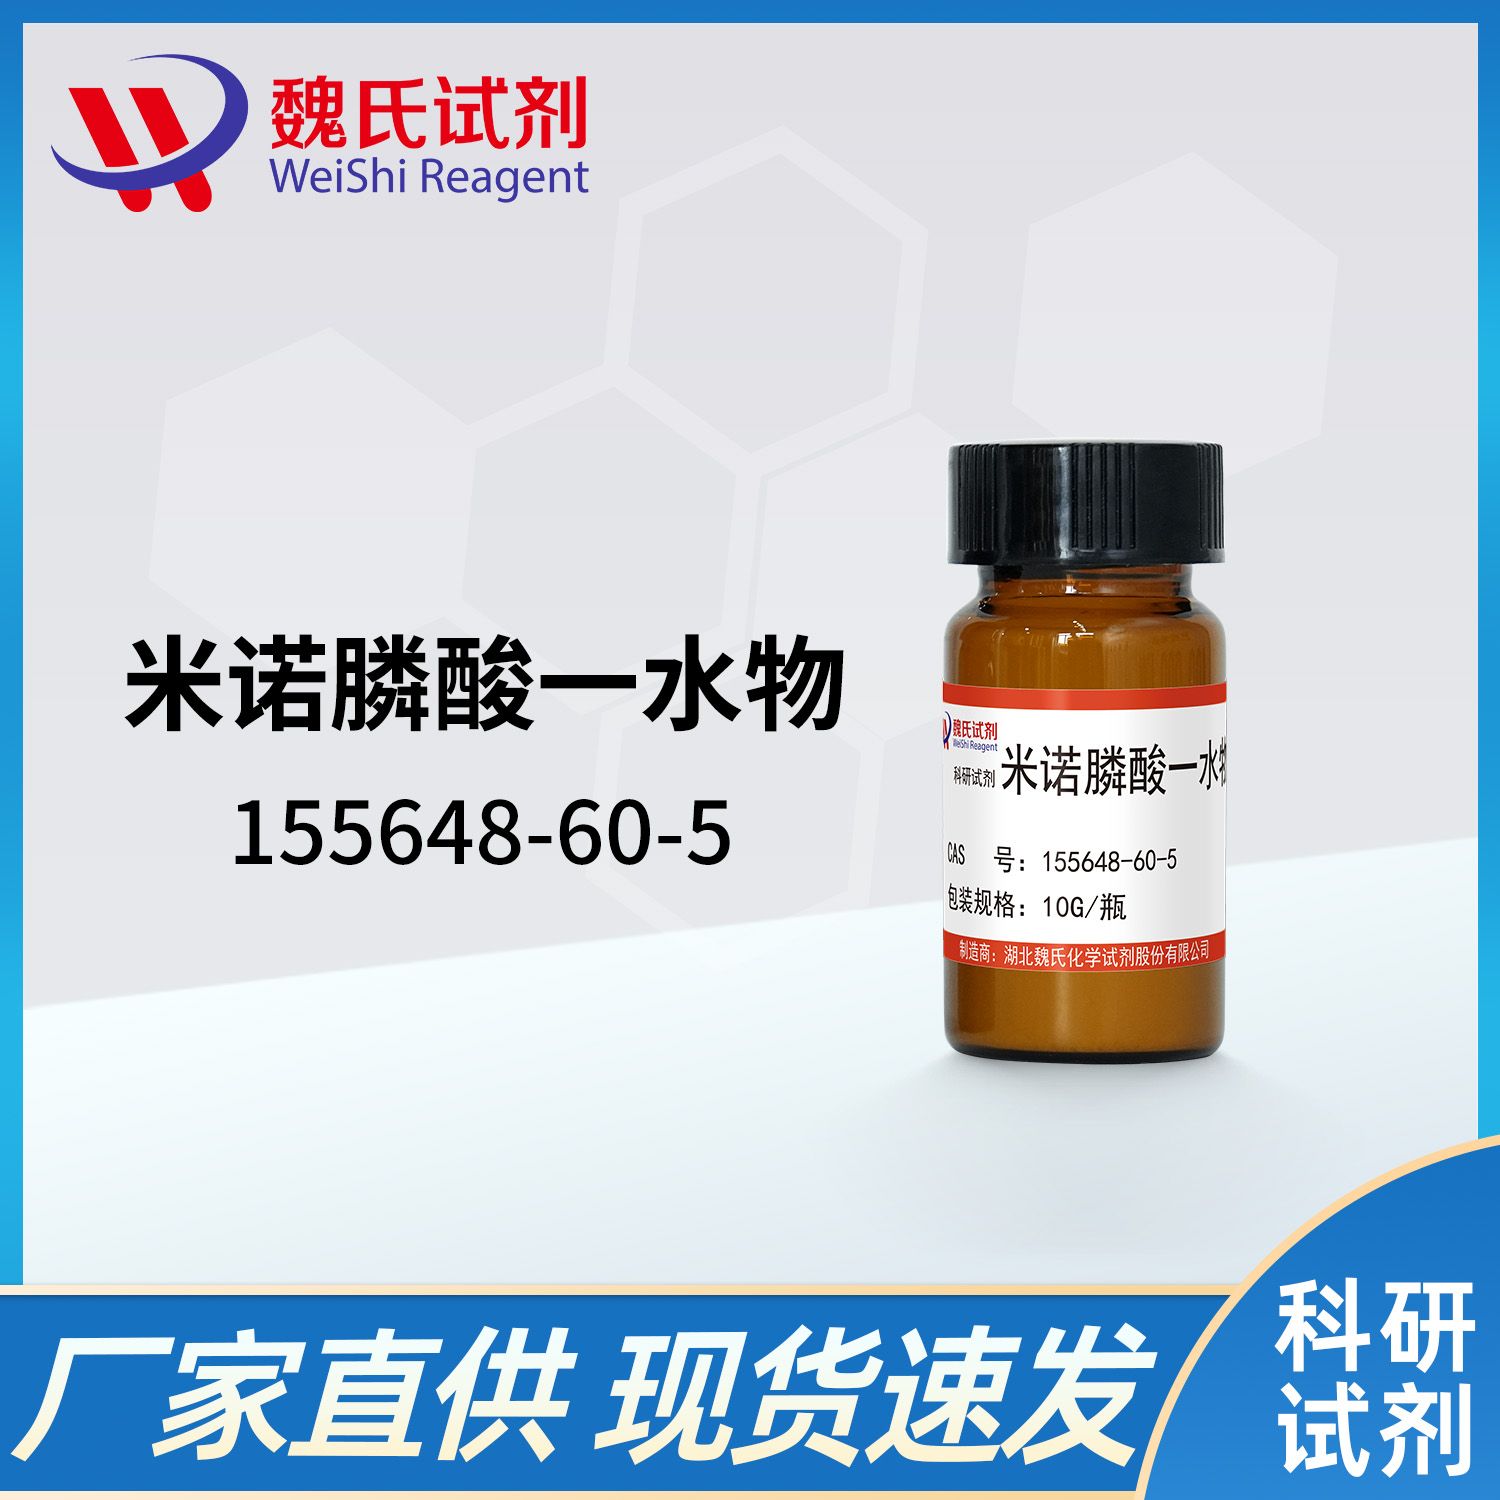 Minodronic acid hydrate—155648-60-5